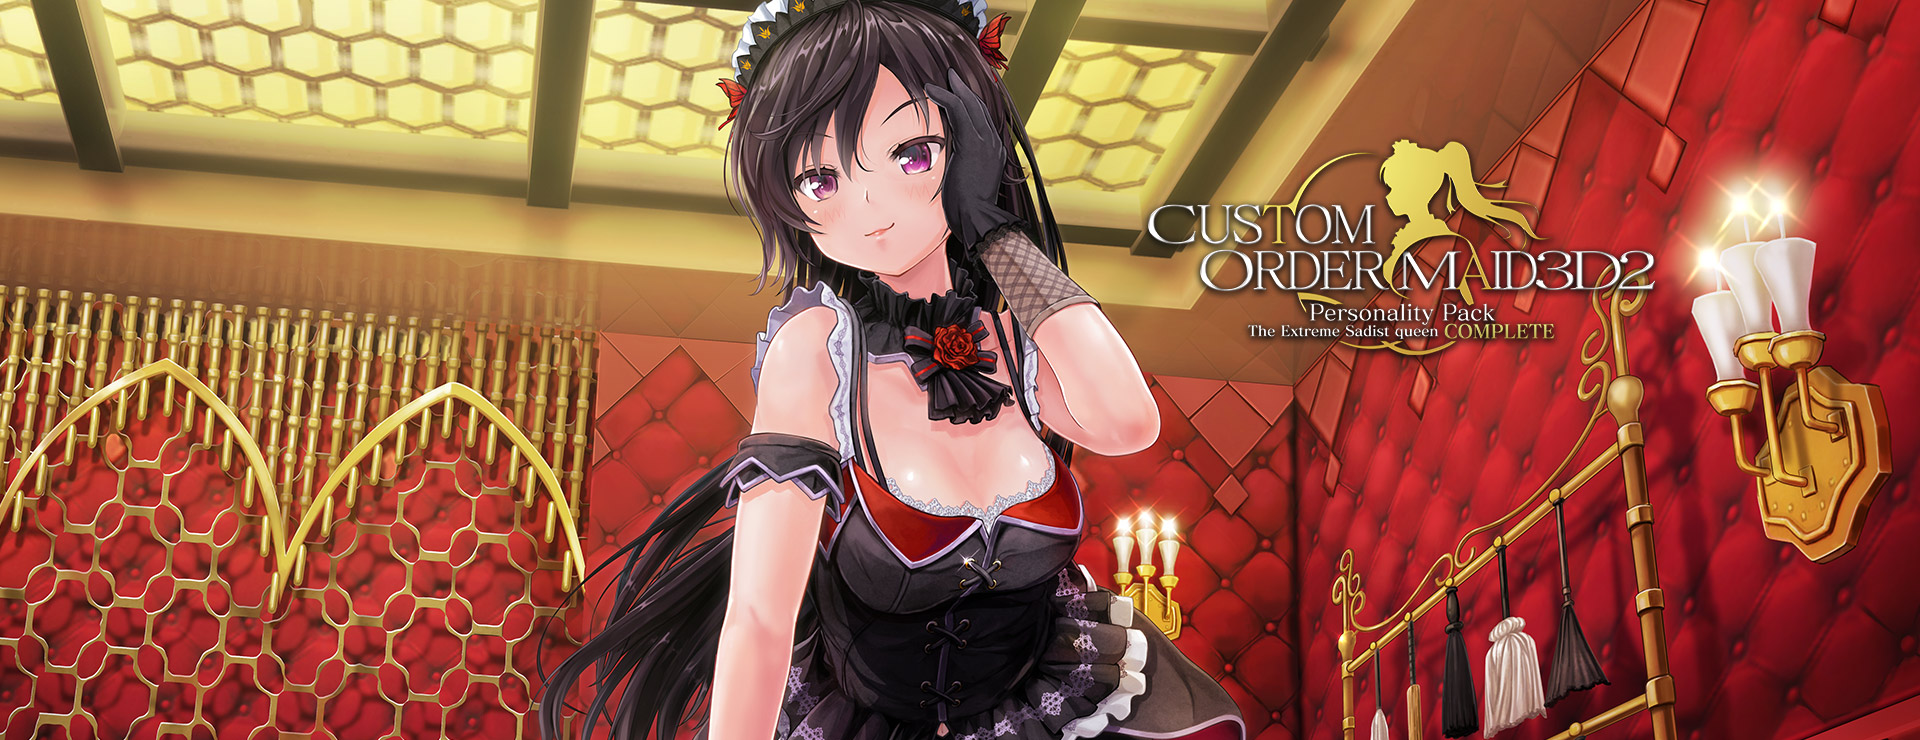 Custom Order Maid 3D 2 - Extreme Sadist Queen Complete Bundle - シミュレーション ゲーム